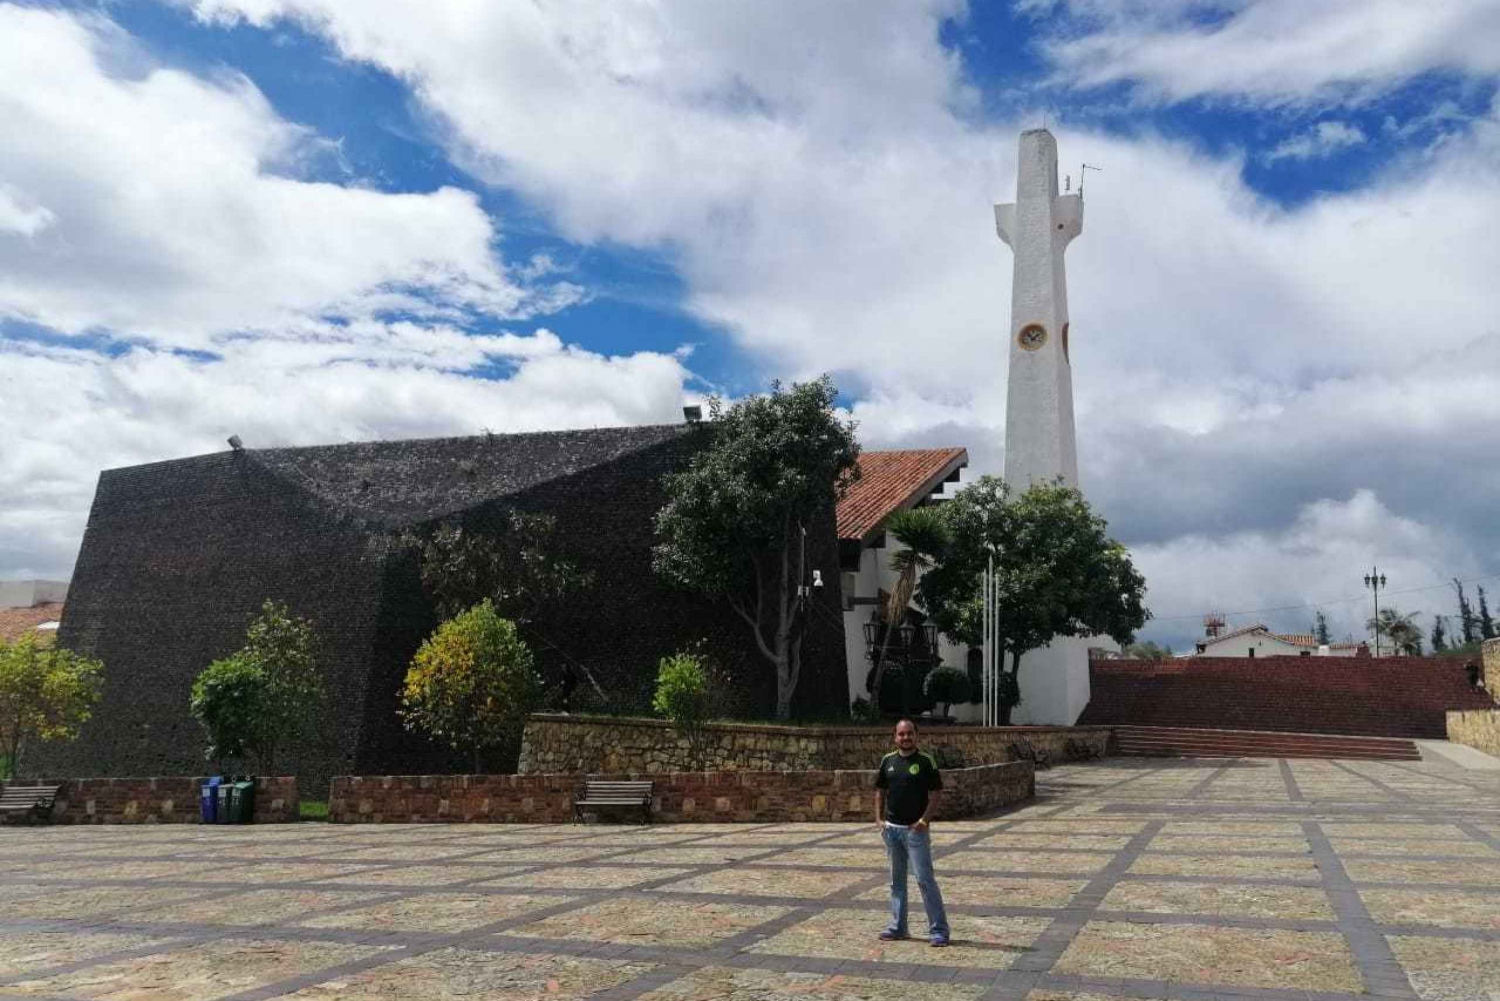 Bogota: Guatavita and Salt Cathedral Daily Group Tour